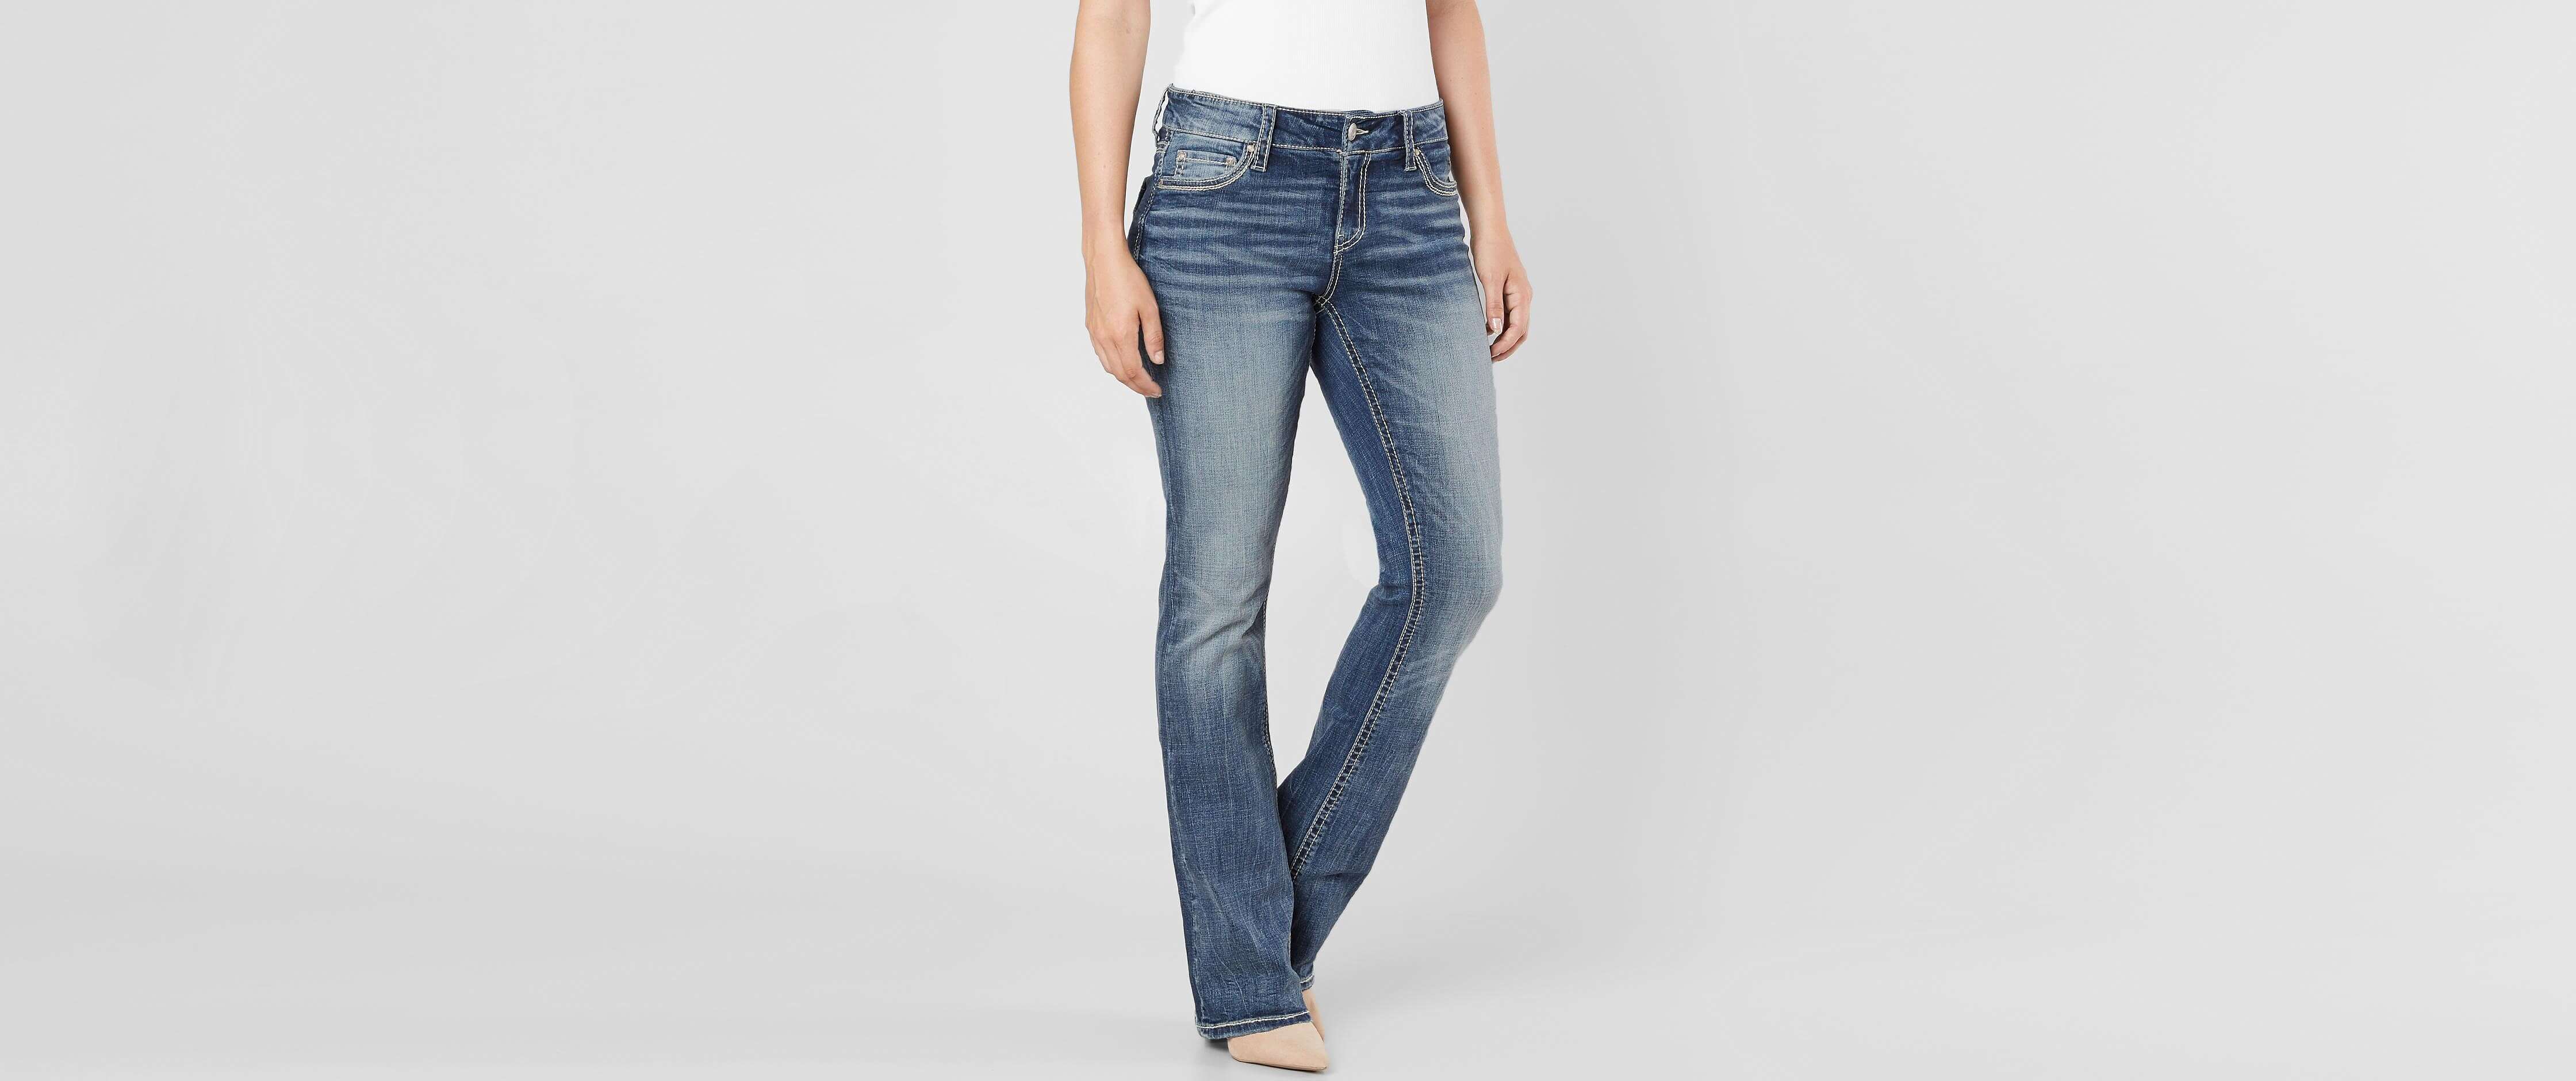 daytrip women's jeans